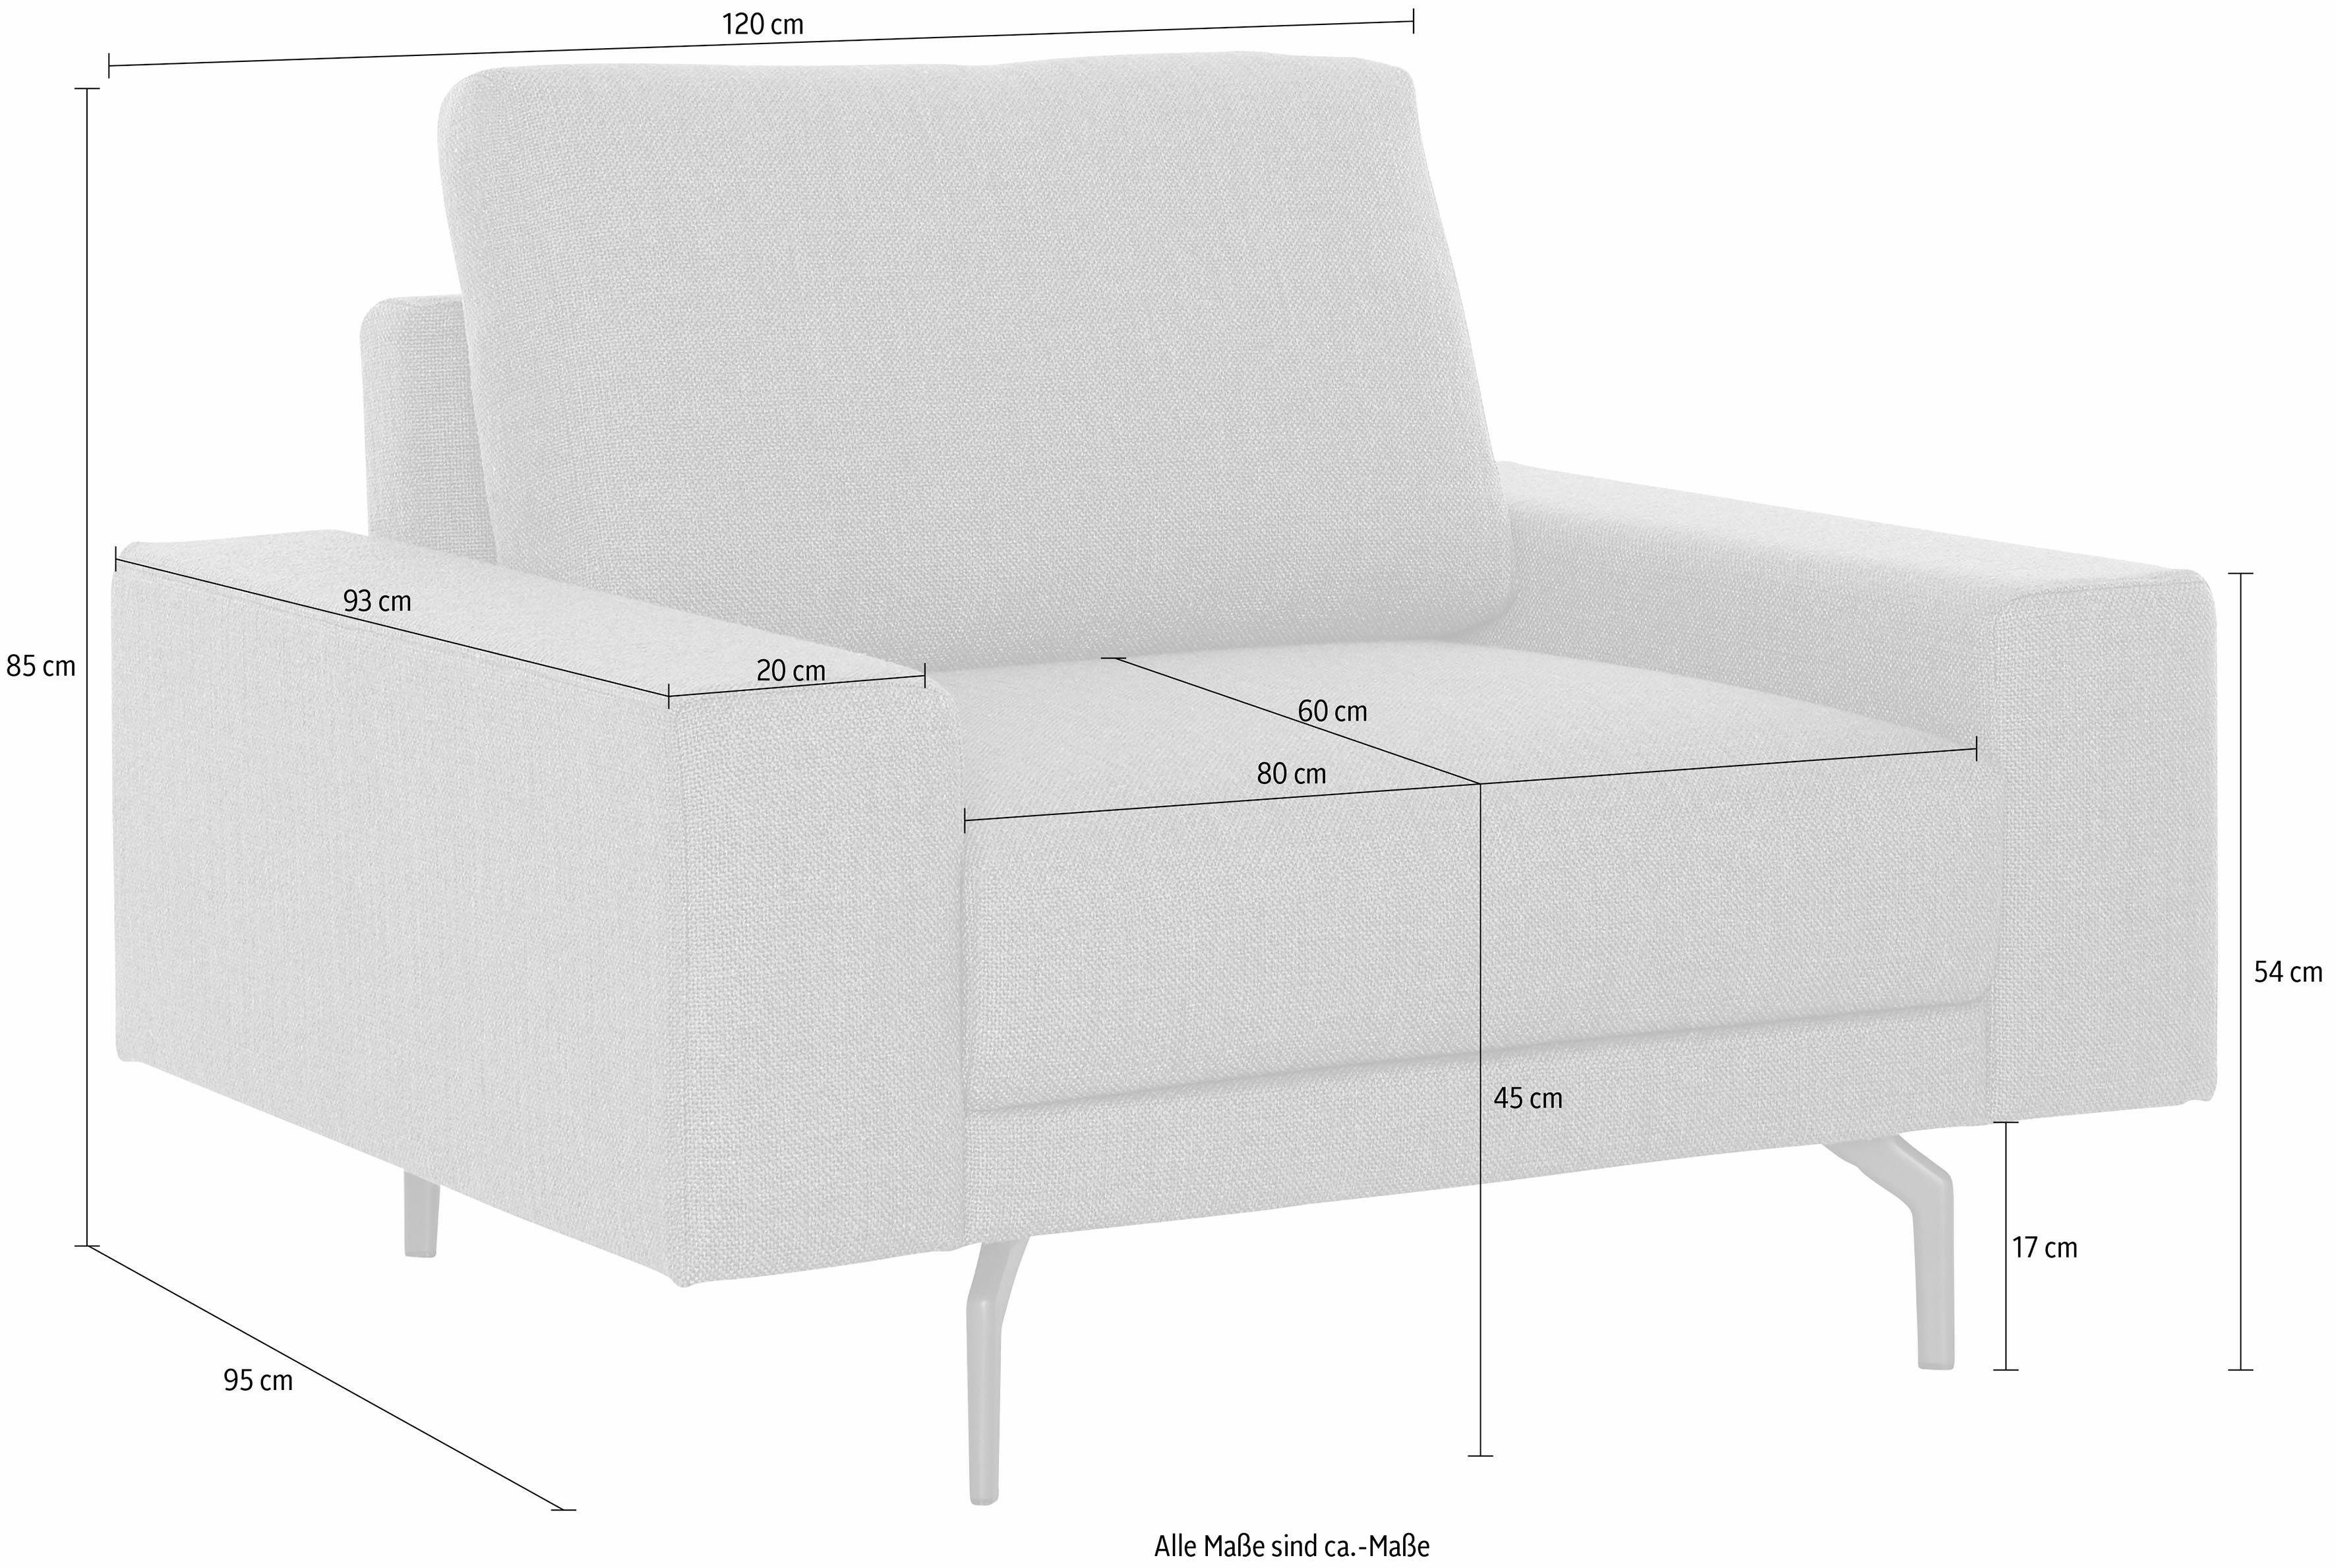 niedrig, breit 120 hs.450, hülsta umbragrau, Breite Armlehne sofa Alugussfüße cm in Sessel